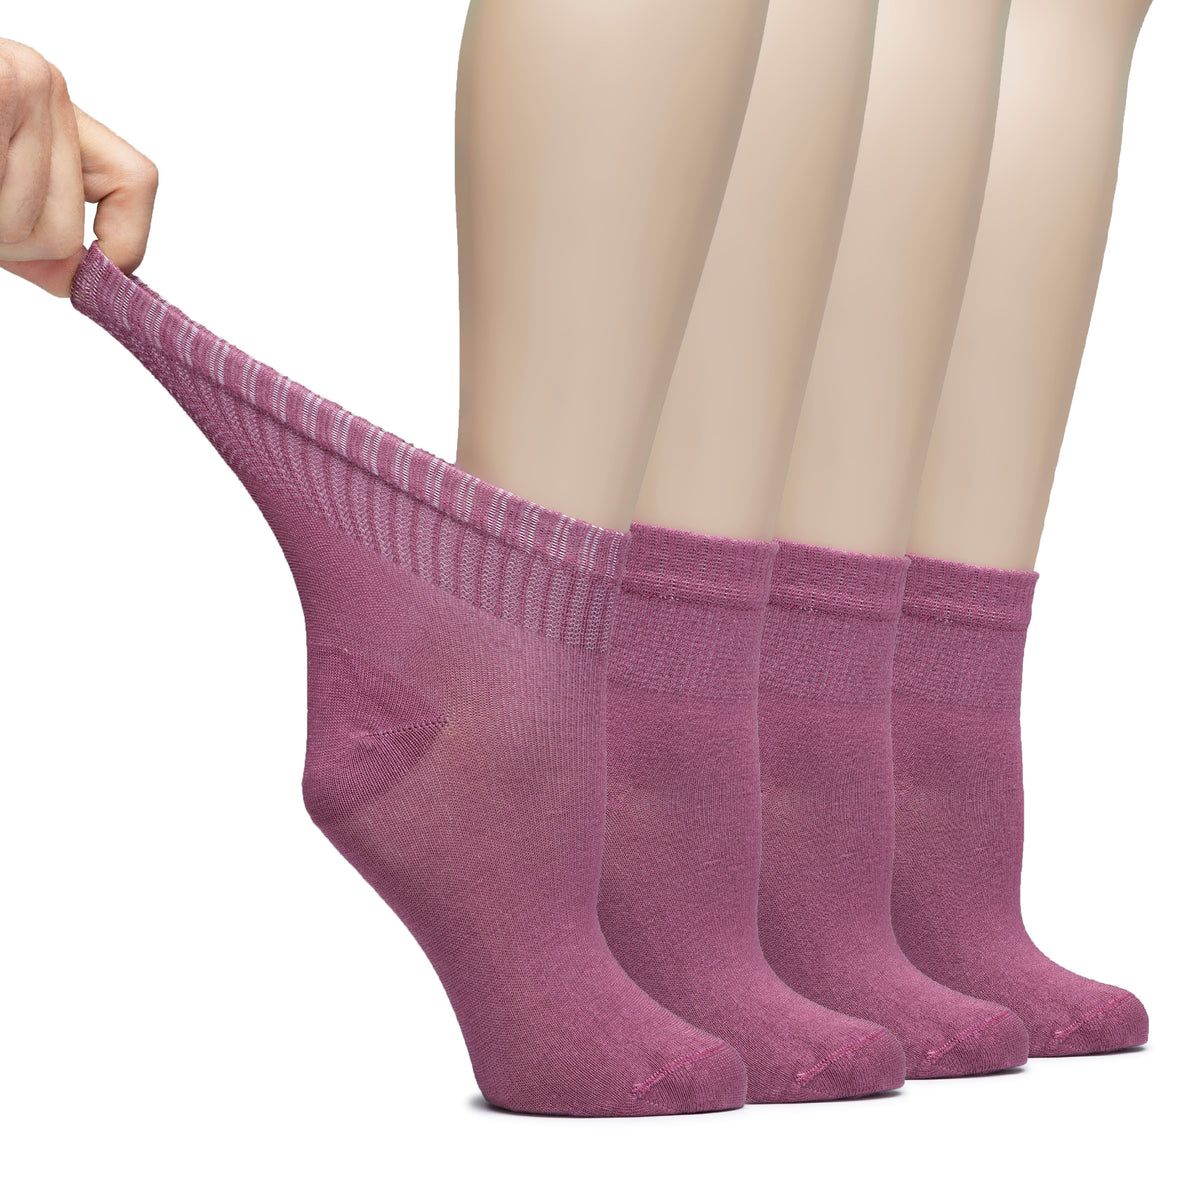 Hugh Ugoli Lightweight Women's Diabetic Ankle Socks Bamboo Thin Socks Seamless Toe and Non-Binding Top, 4 Pairs, , Shoe Size: 6-9/10-12 | Shoe Size: 10-12 | Rose Wood